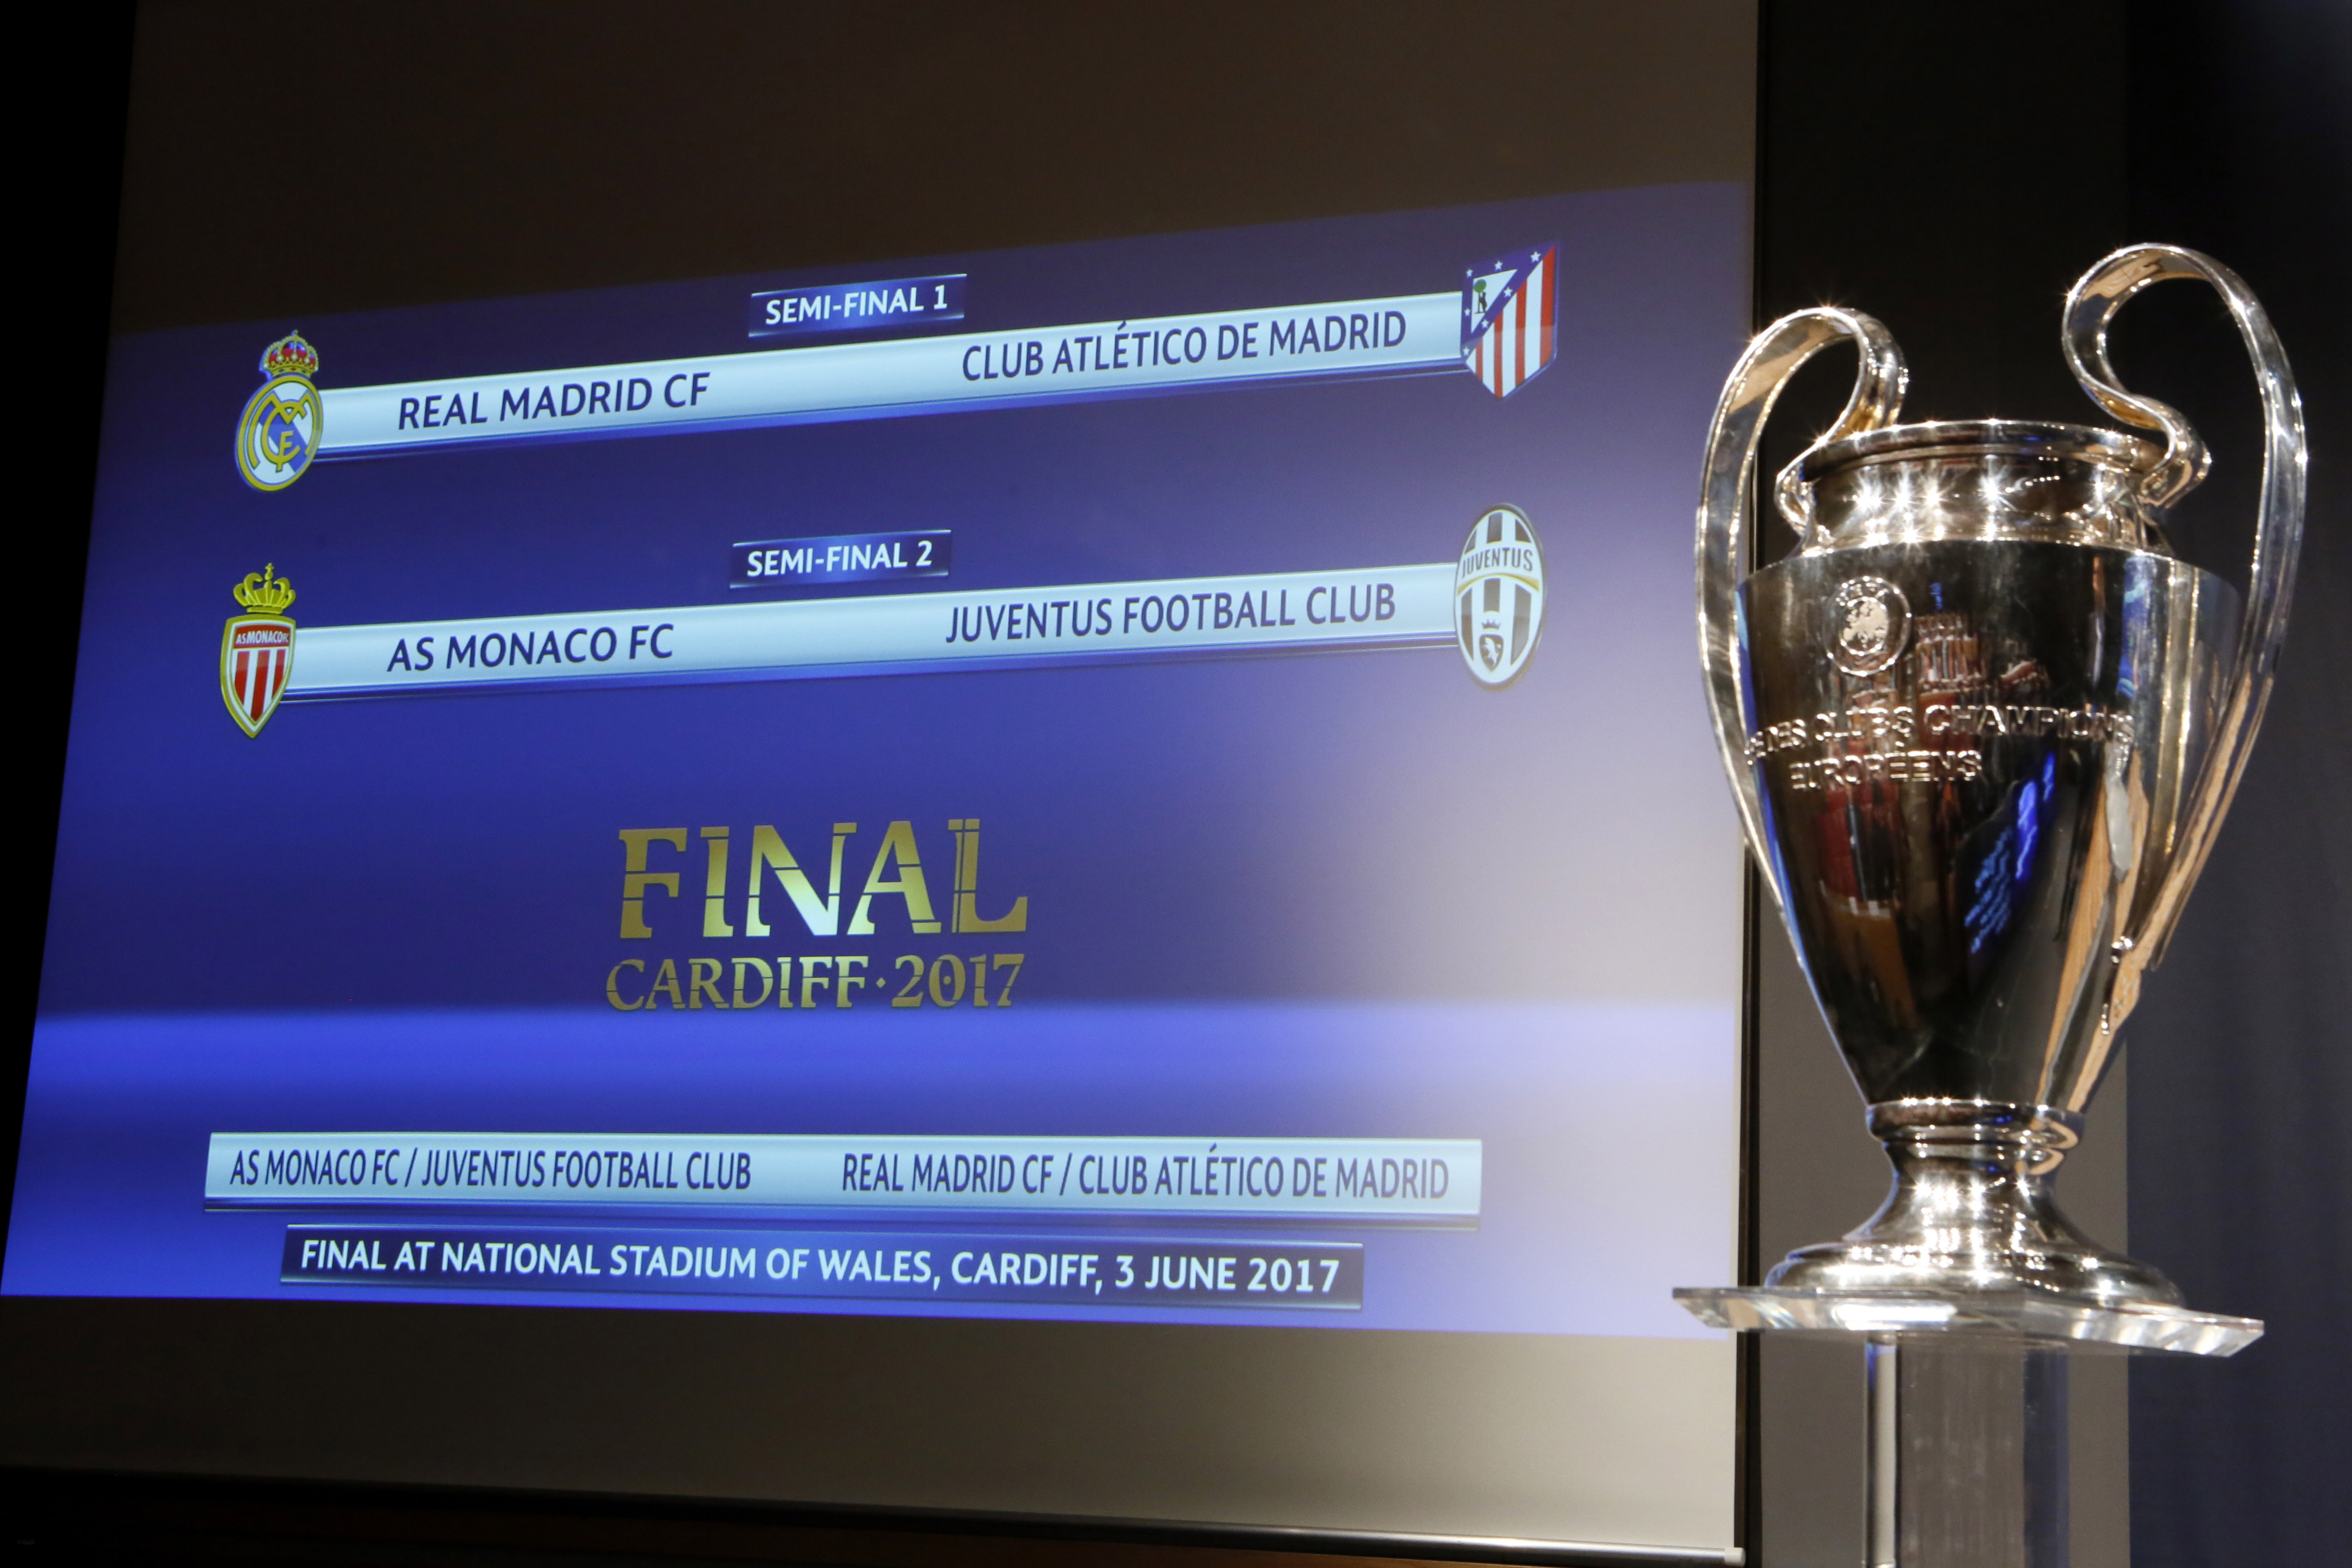 Salas de cinema exibem final da UEFA Champions League